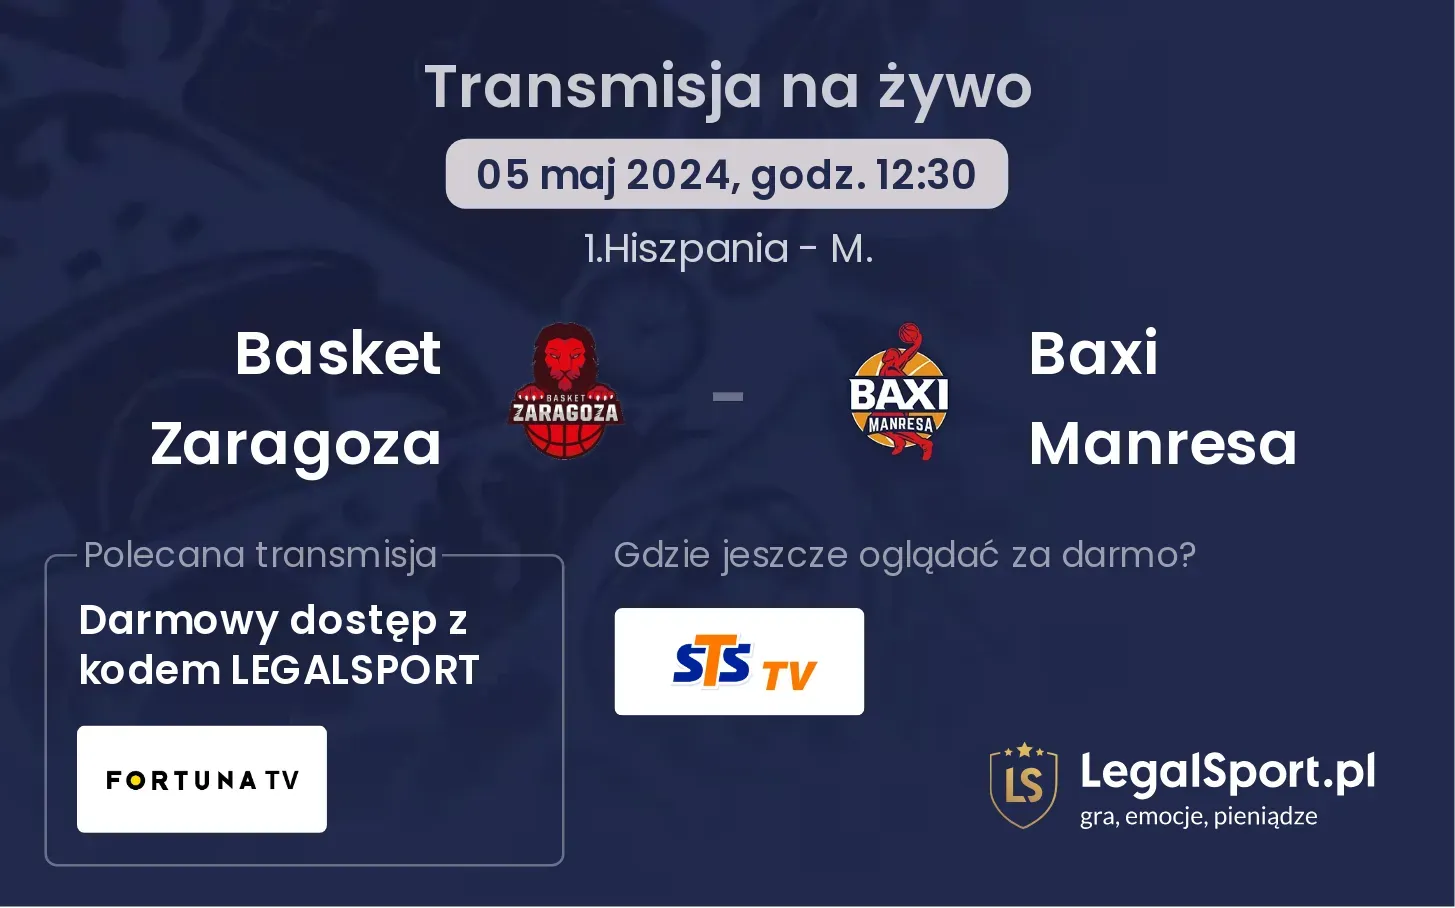 Basket Zaragoza - Baxi Manresa transmisja na żywo